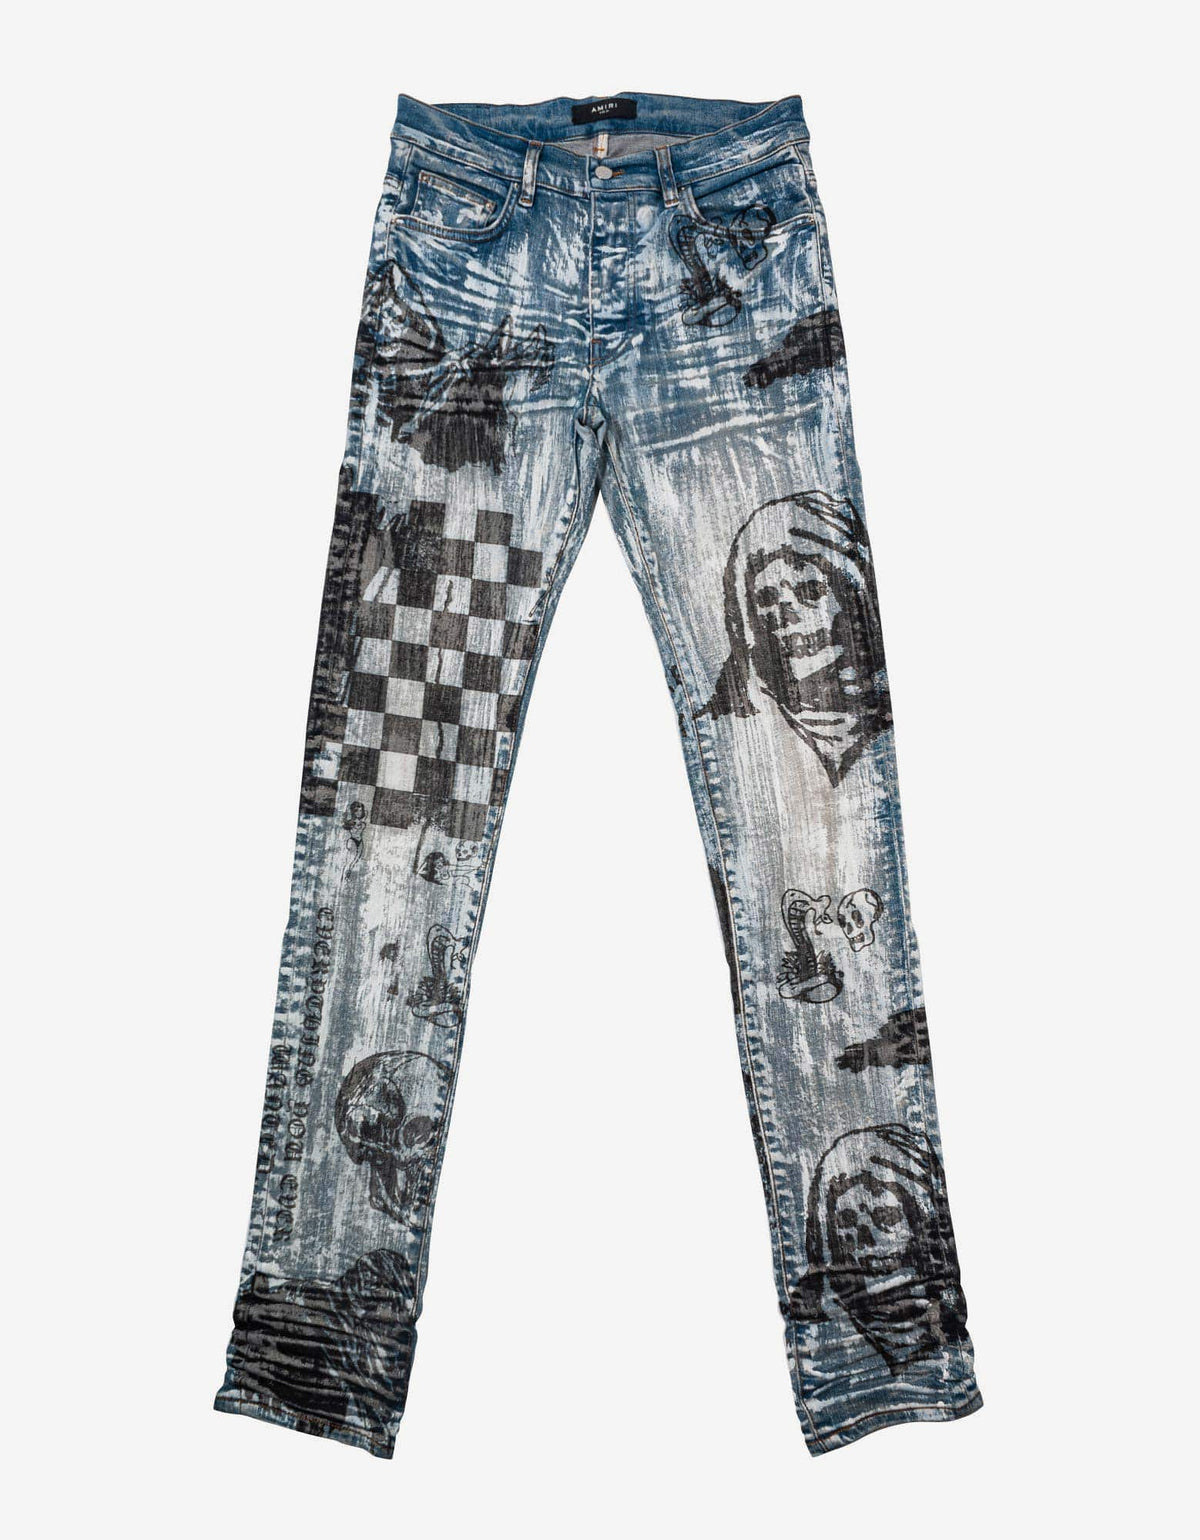 Amiri Wes Lang Blue Sketch Jeans